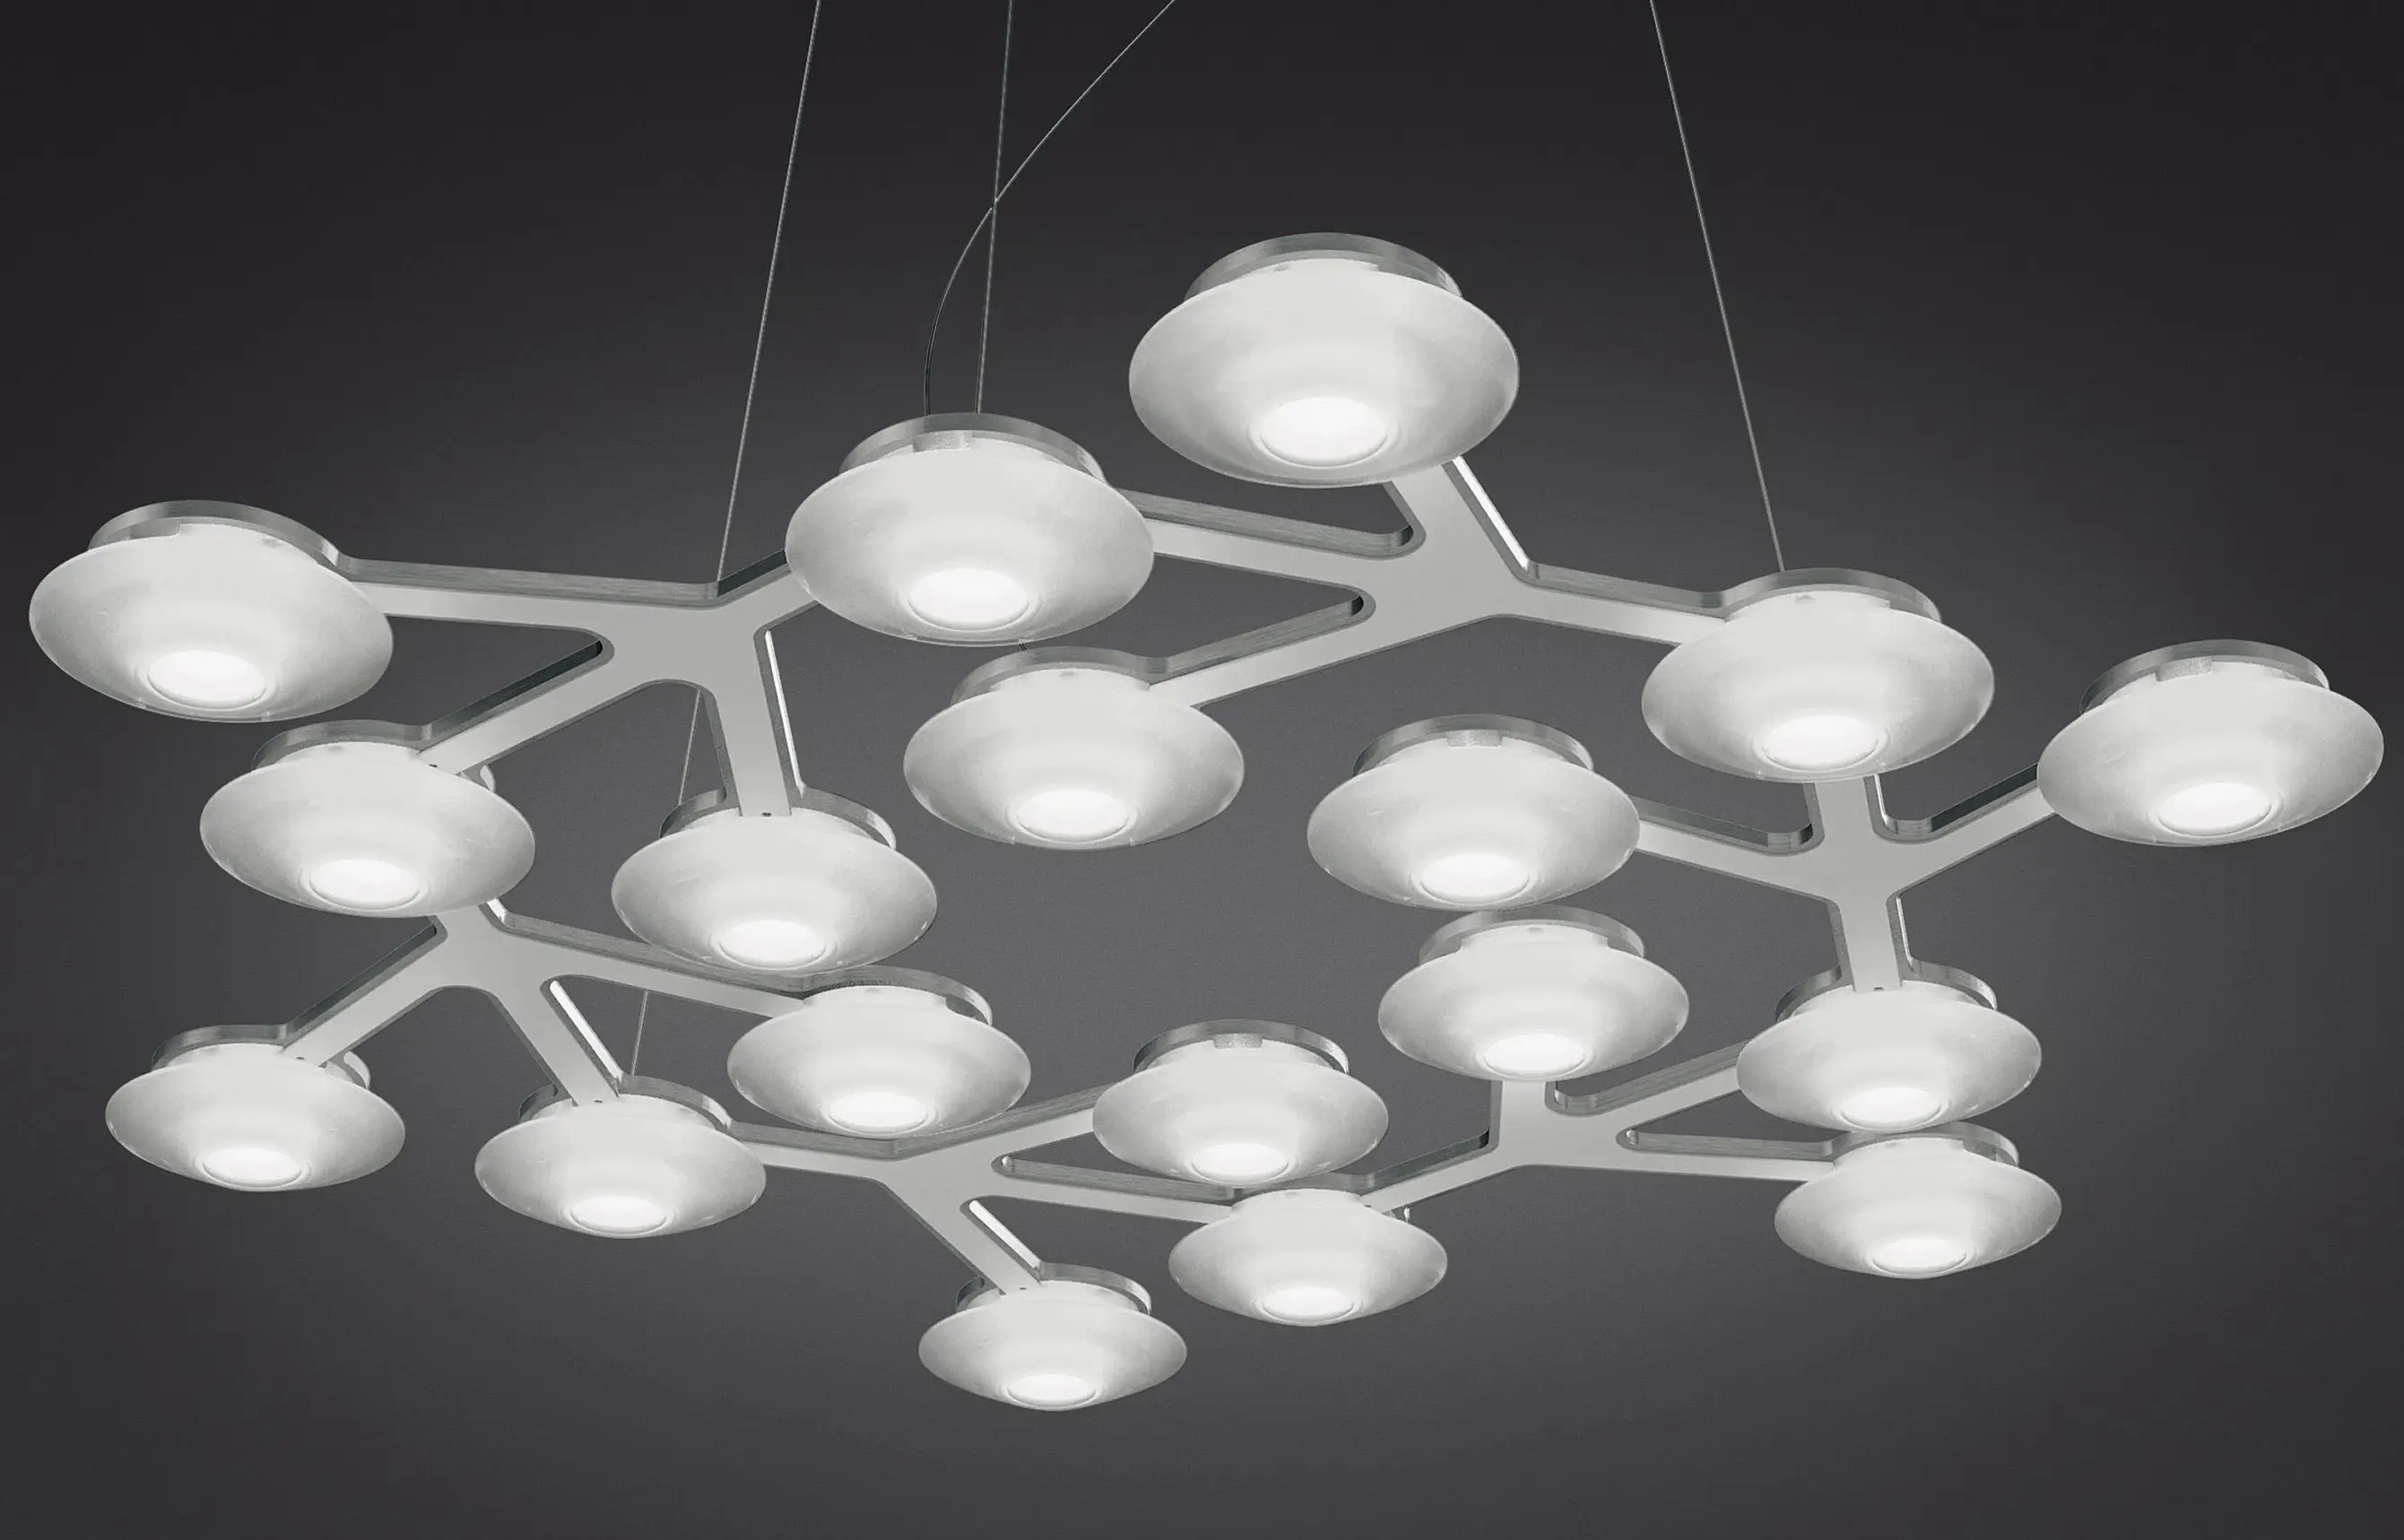 Overhead lamp LED NET CIRCLE by Artemide